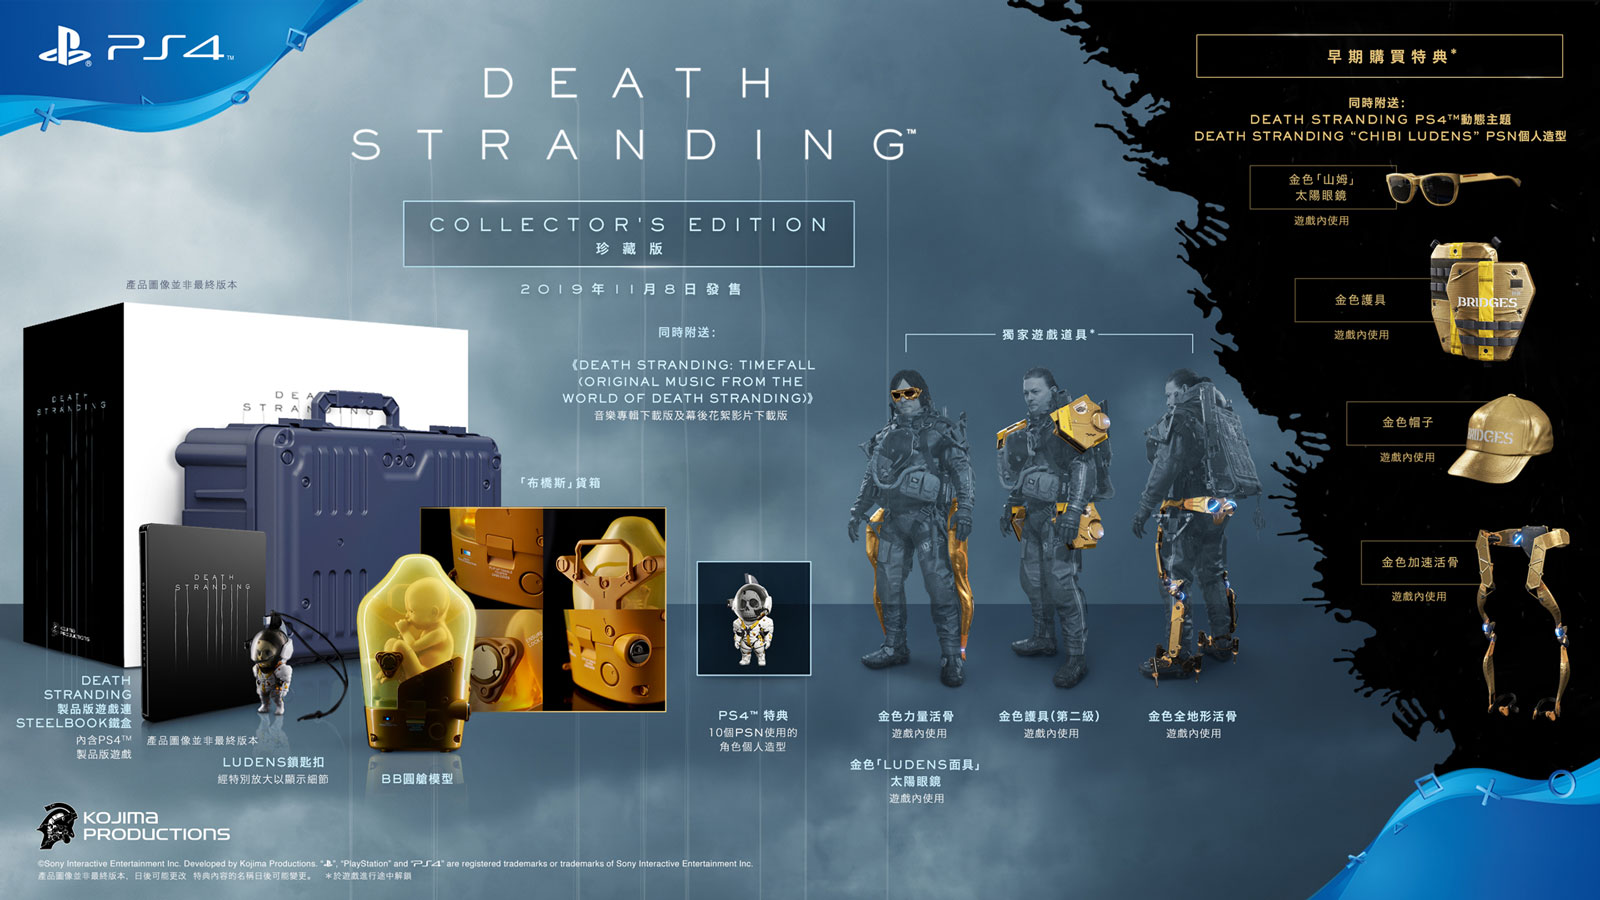 DEATH_STRANDING - PlayStation®4遊戲《DEATH STRANDING》 將於11月8日發售 下載版5月30日起接受預購 Ds_sku13